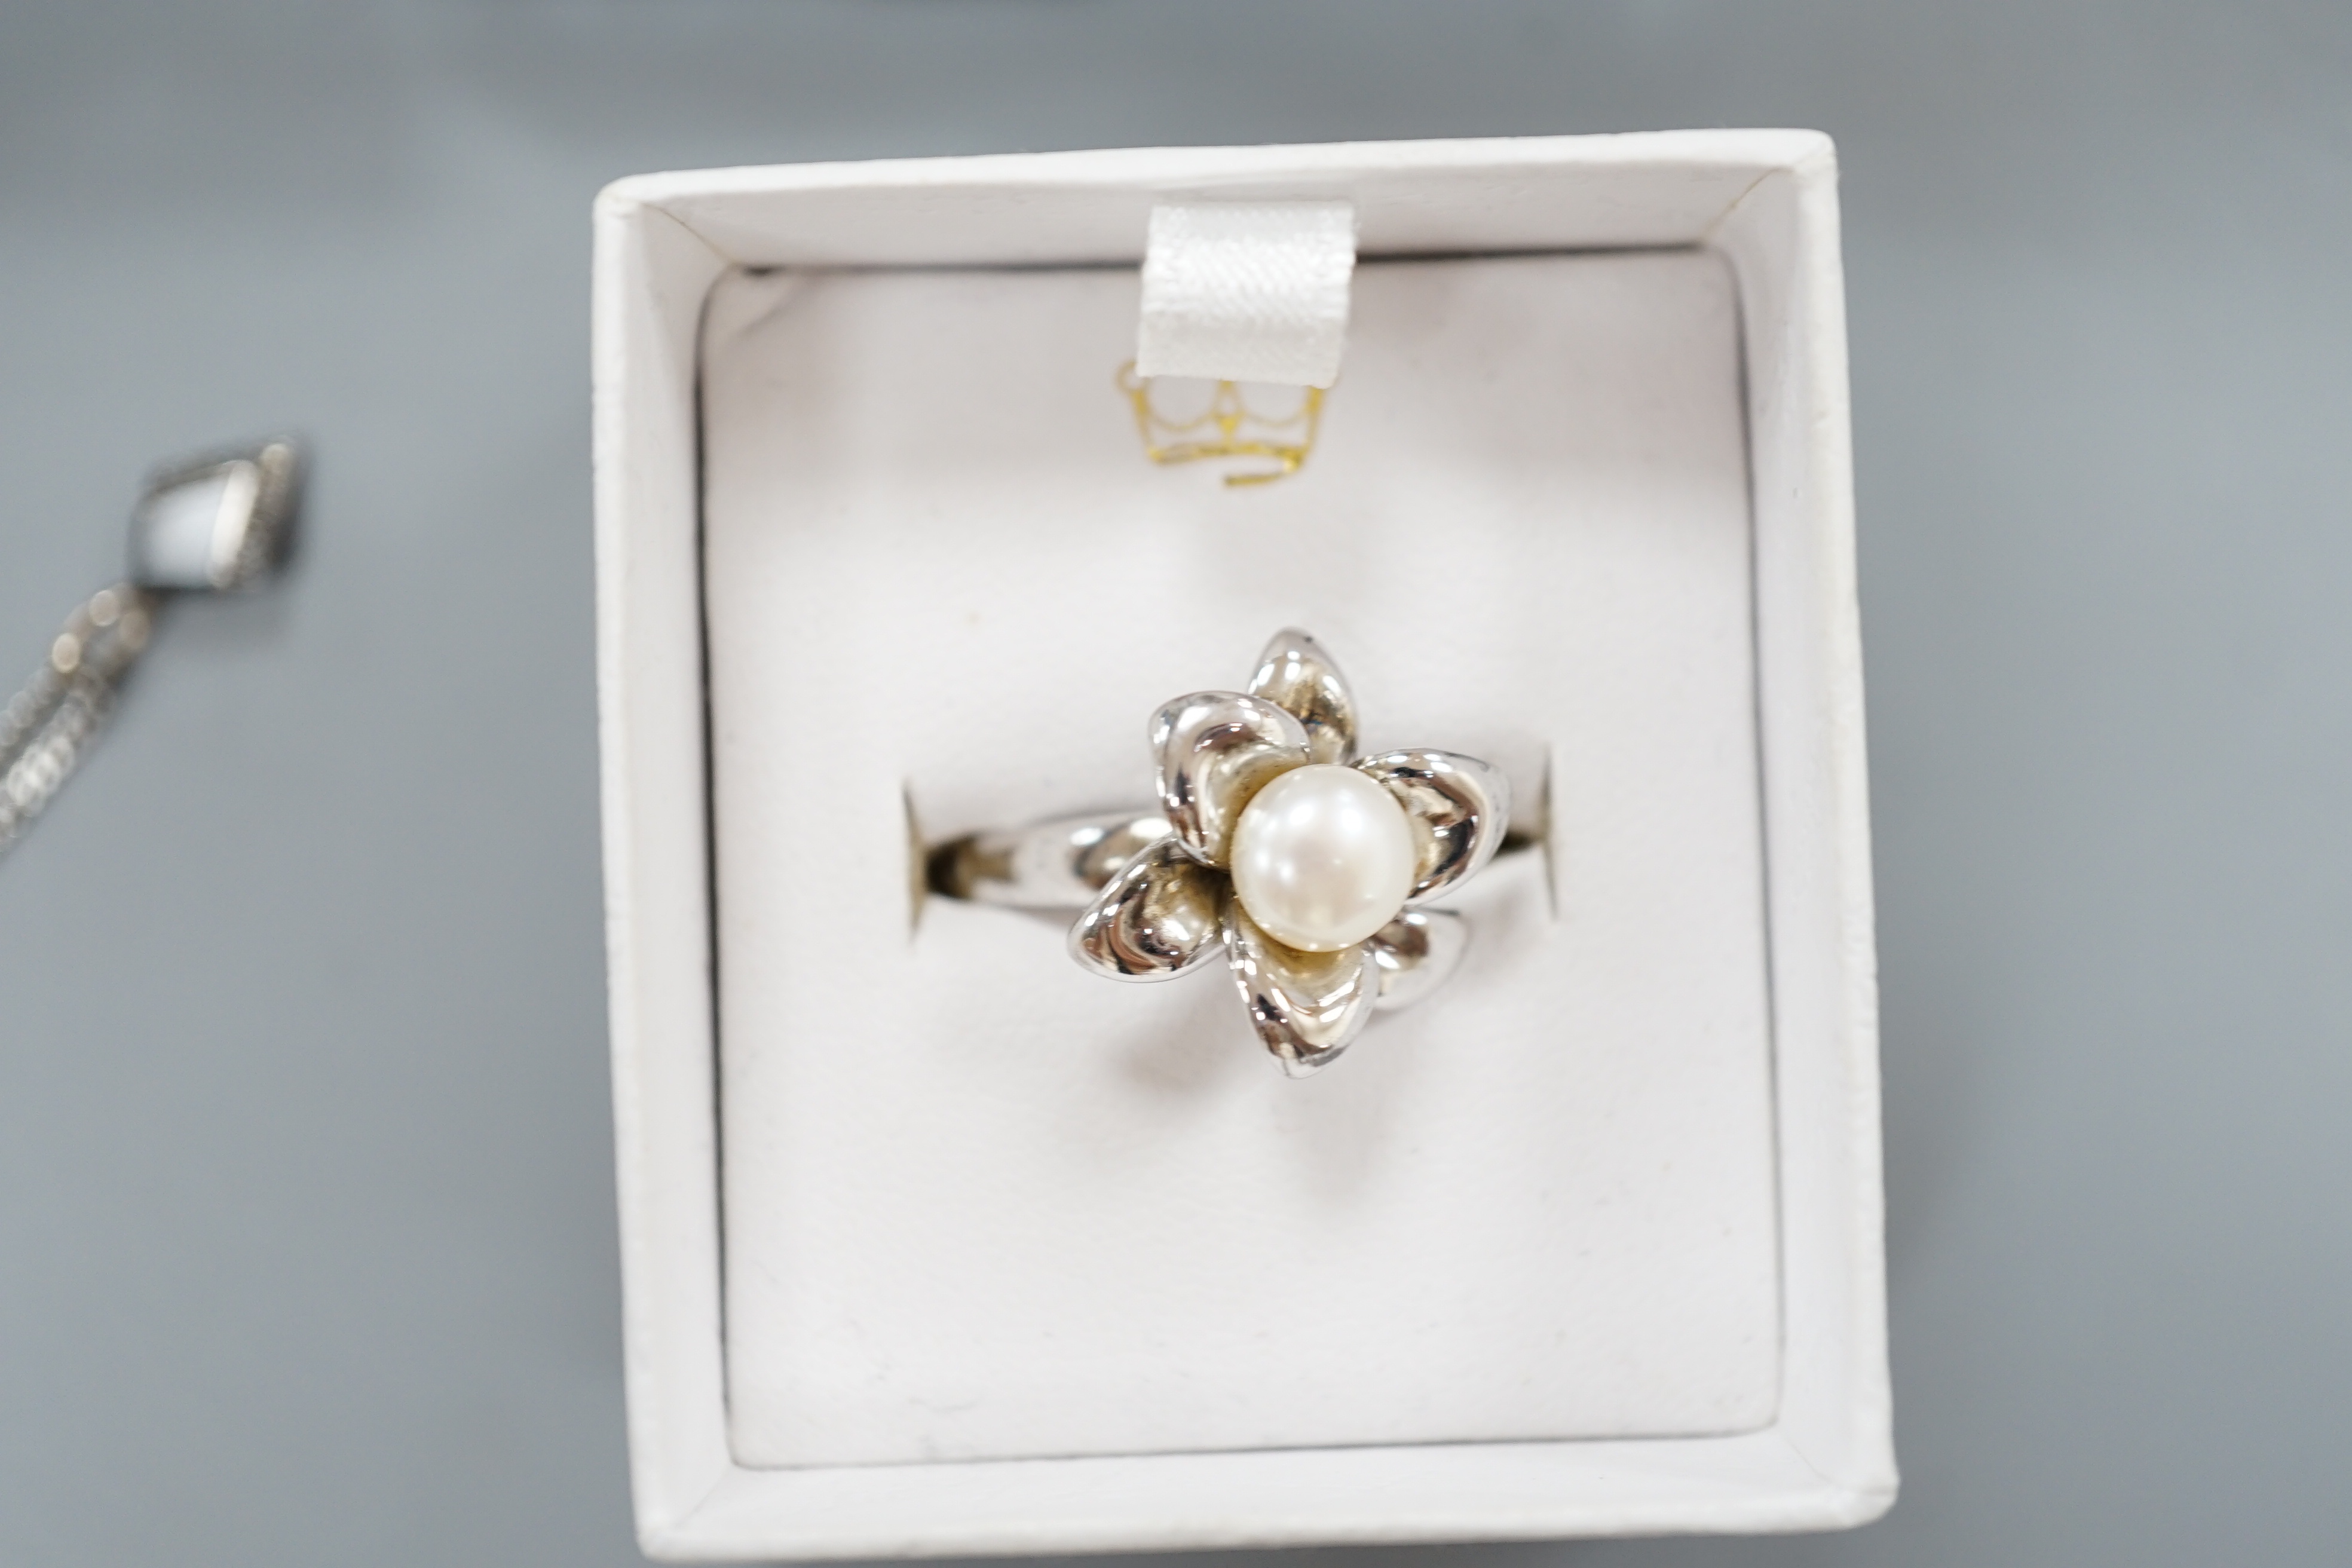 A small quantity of modern 925 and gem set jewellery and a Christian Dior quartz wrist watch.